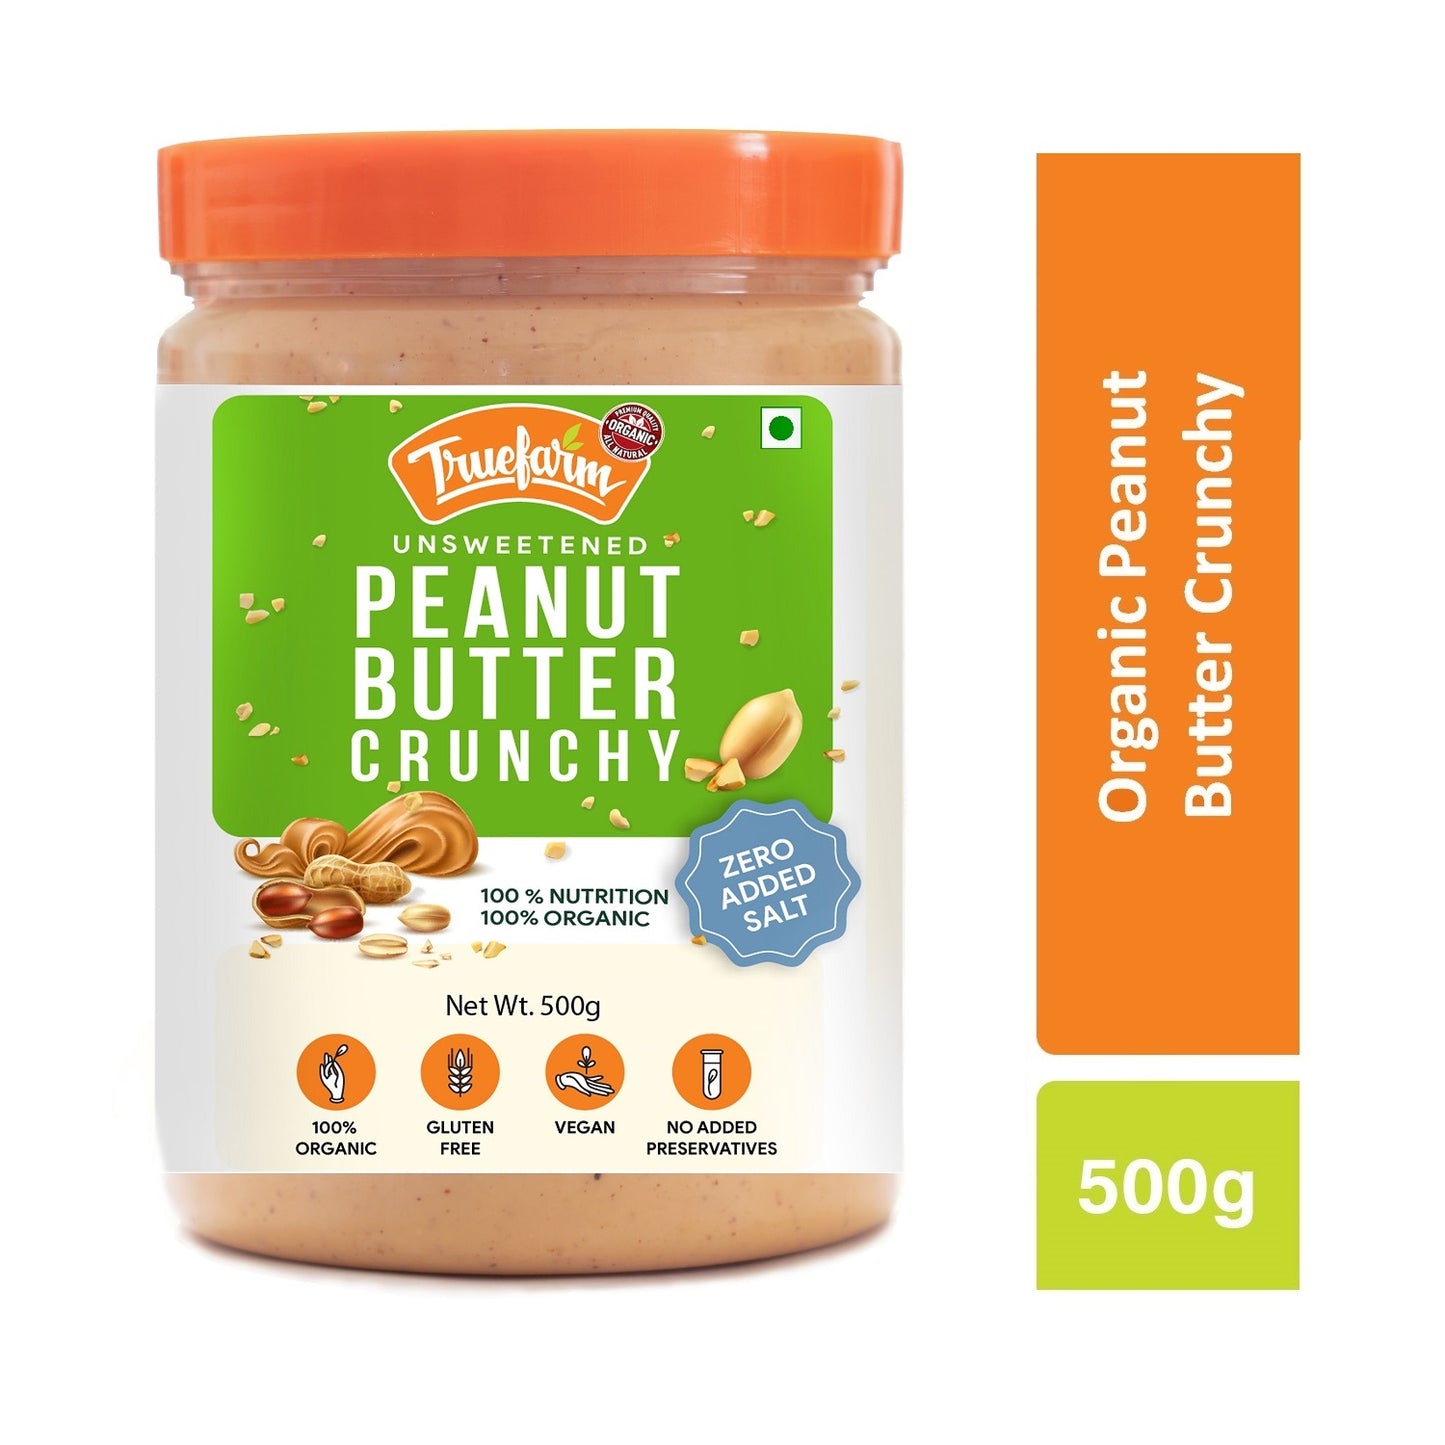 
                  
                    Truefarm Foods Organic Peanut Butter - Crunchy (500g)
                  
                